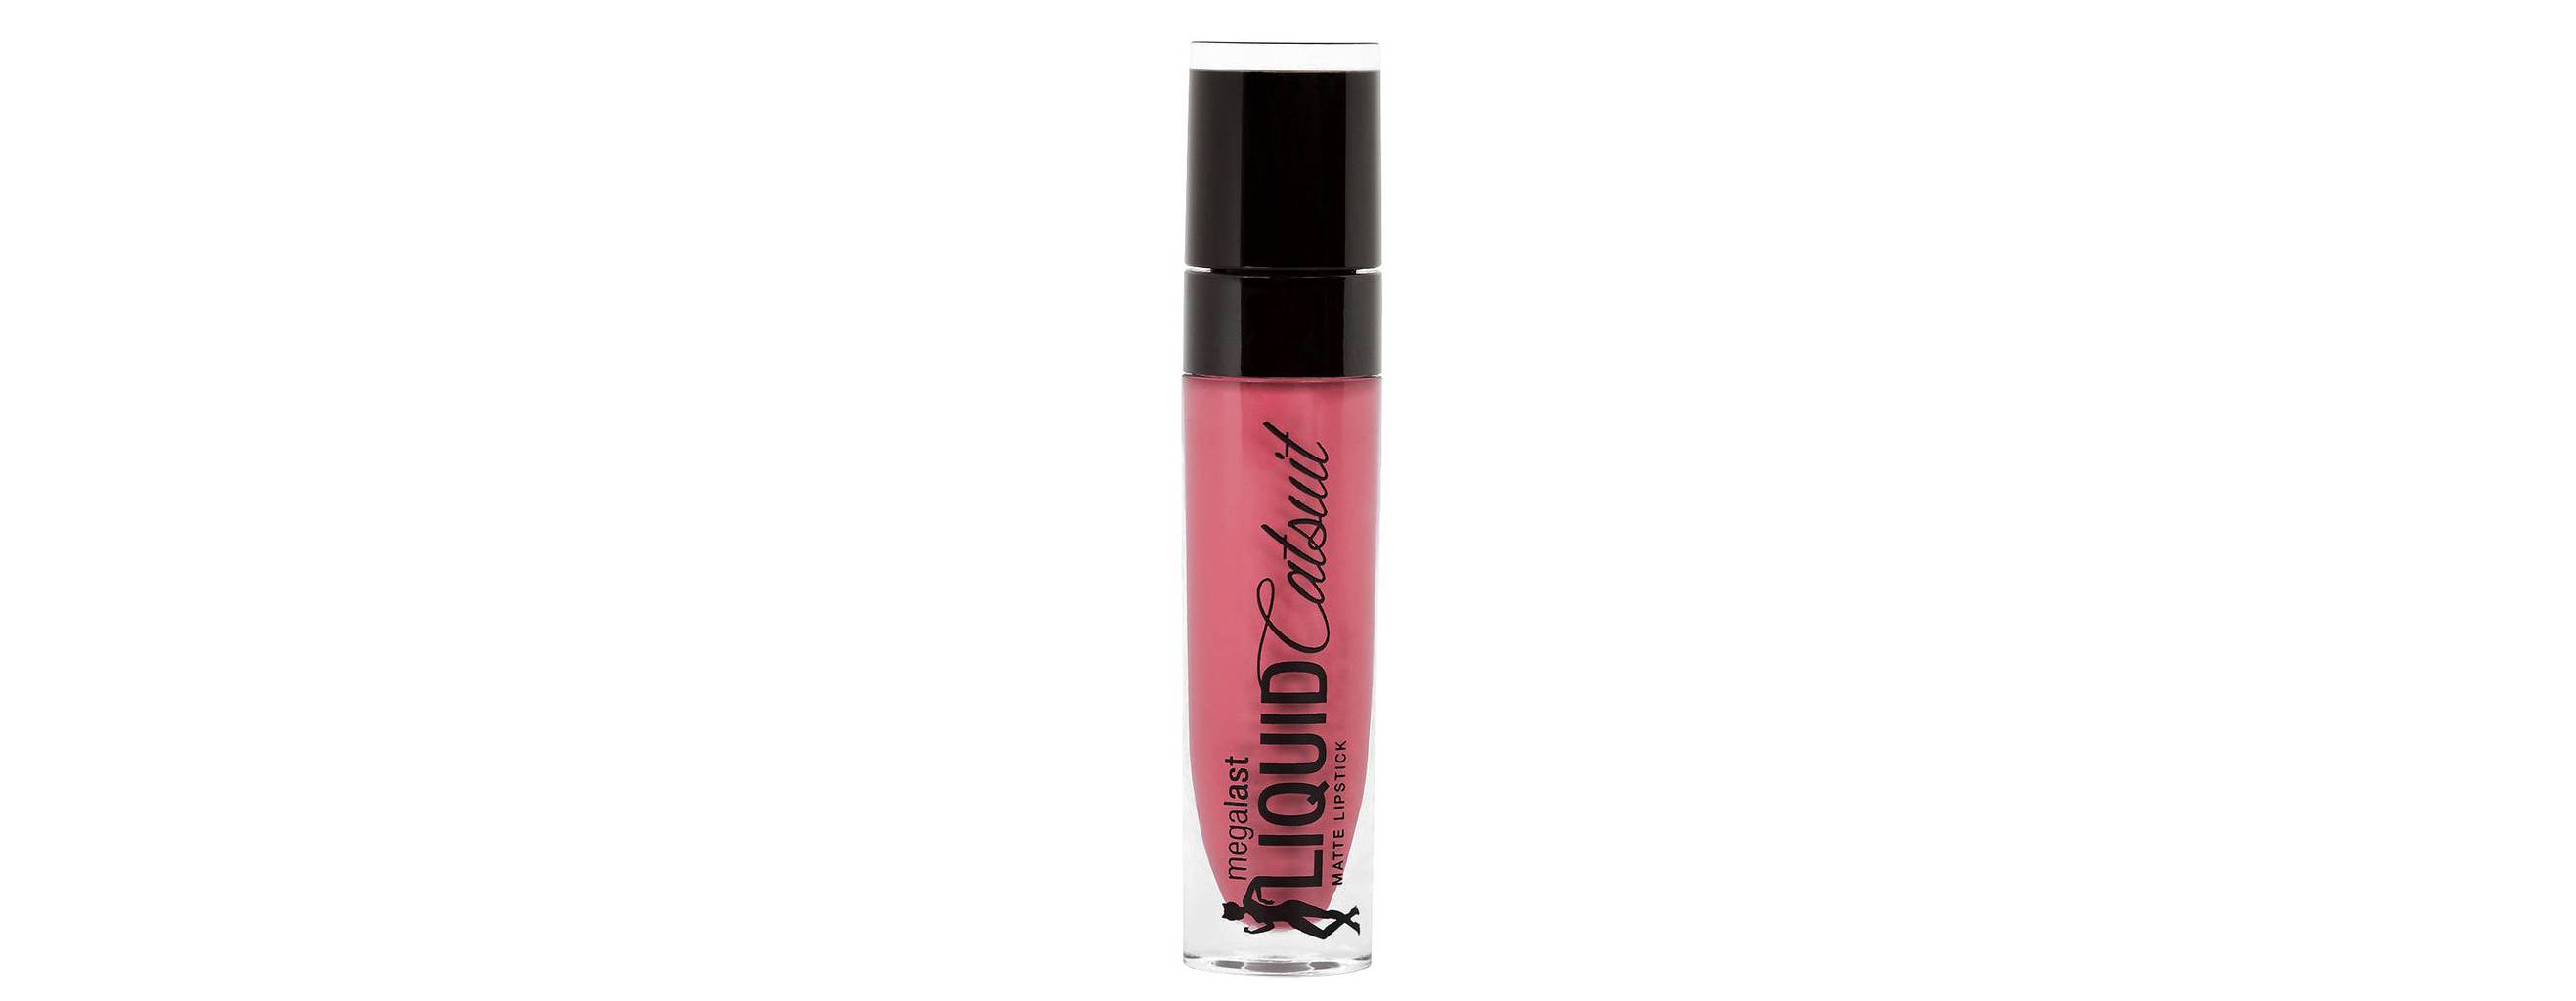 Wet n Wild MegaLast Liquid Catsuit Lipstick: Pink Really Hard